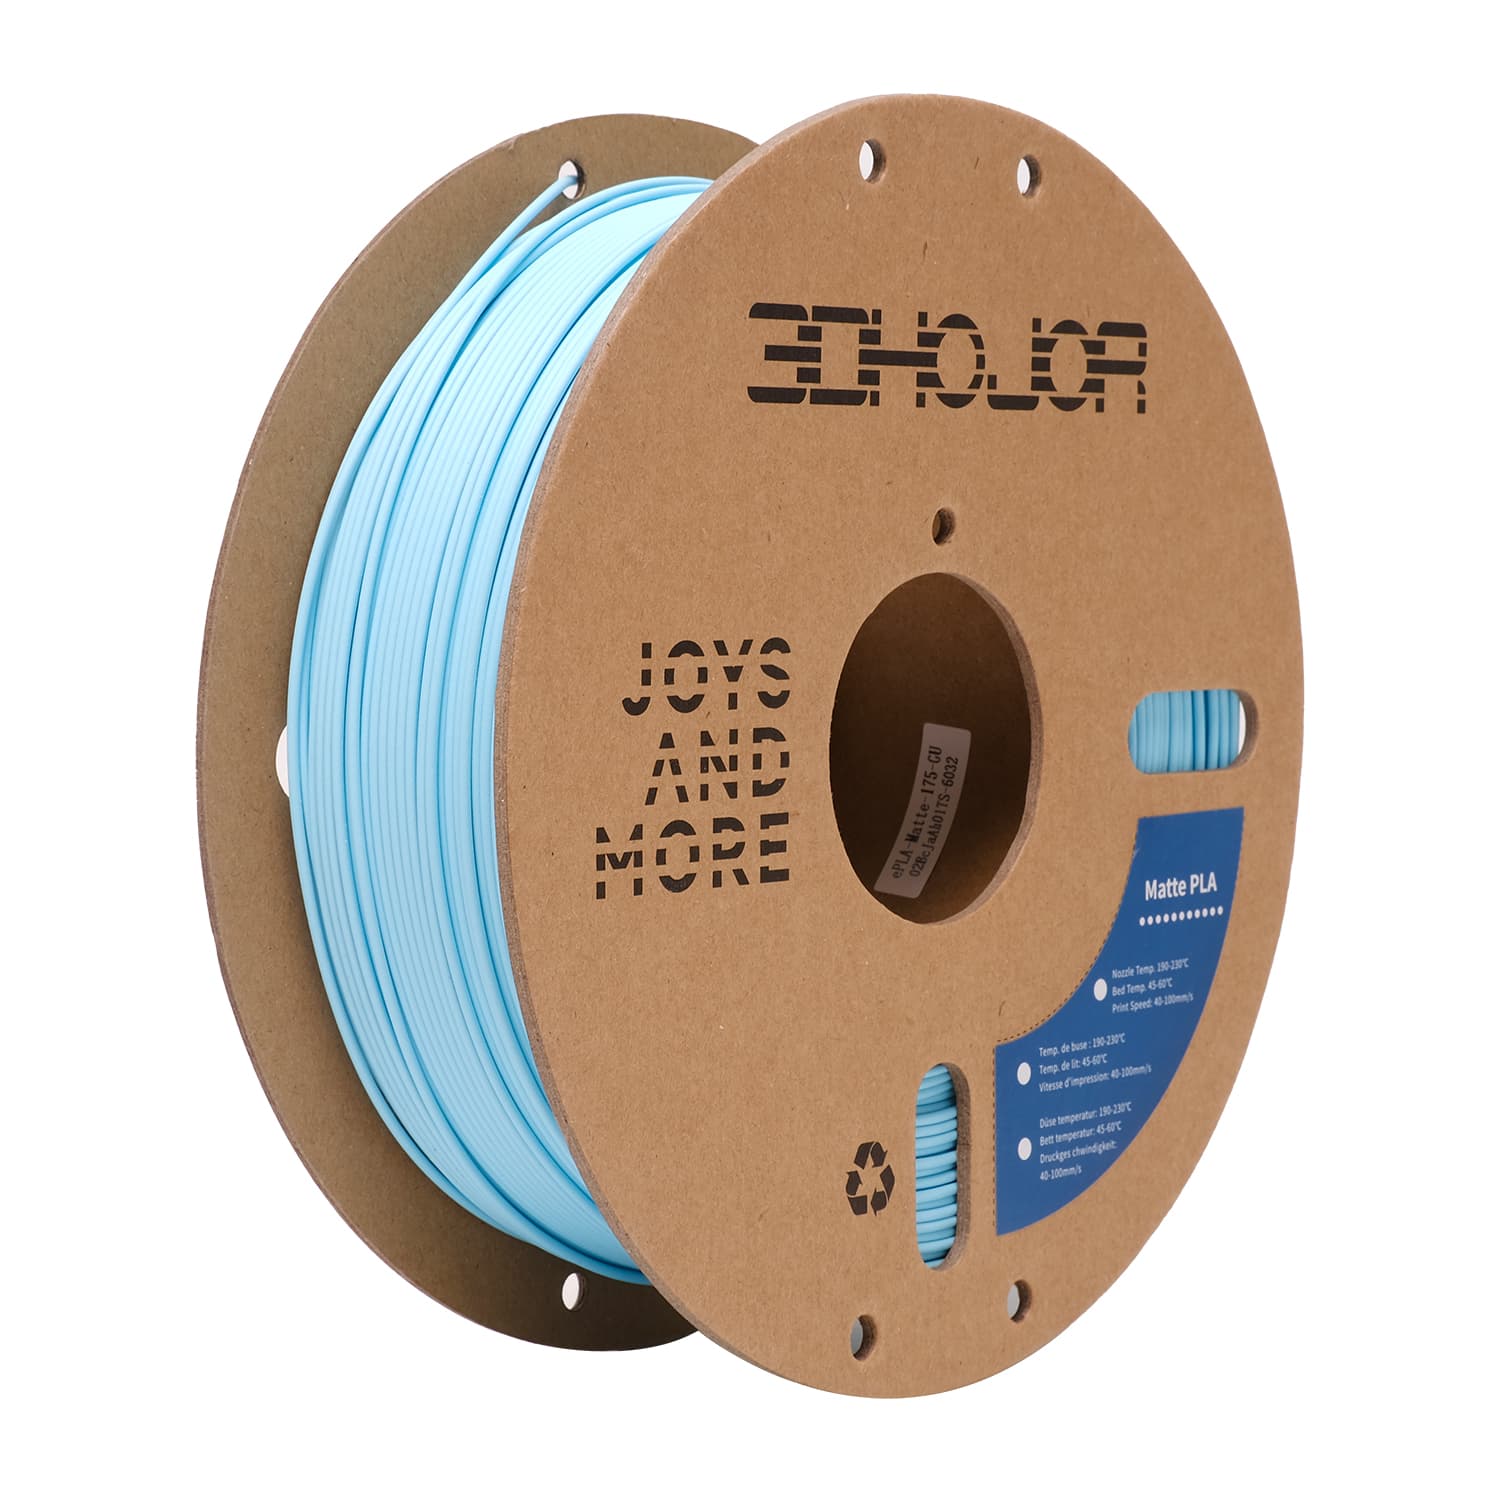 3DHoJor Matte PLA Filament 1.75mm Light Blue, PLA 3D Printer Filament, 1kg Spool (2.2lbs)